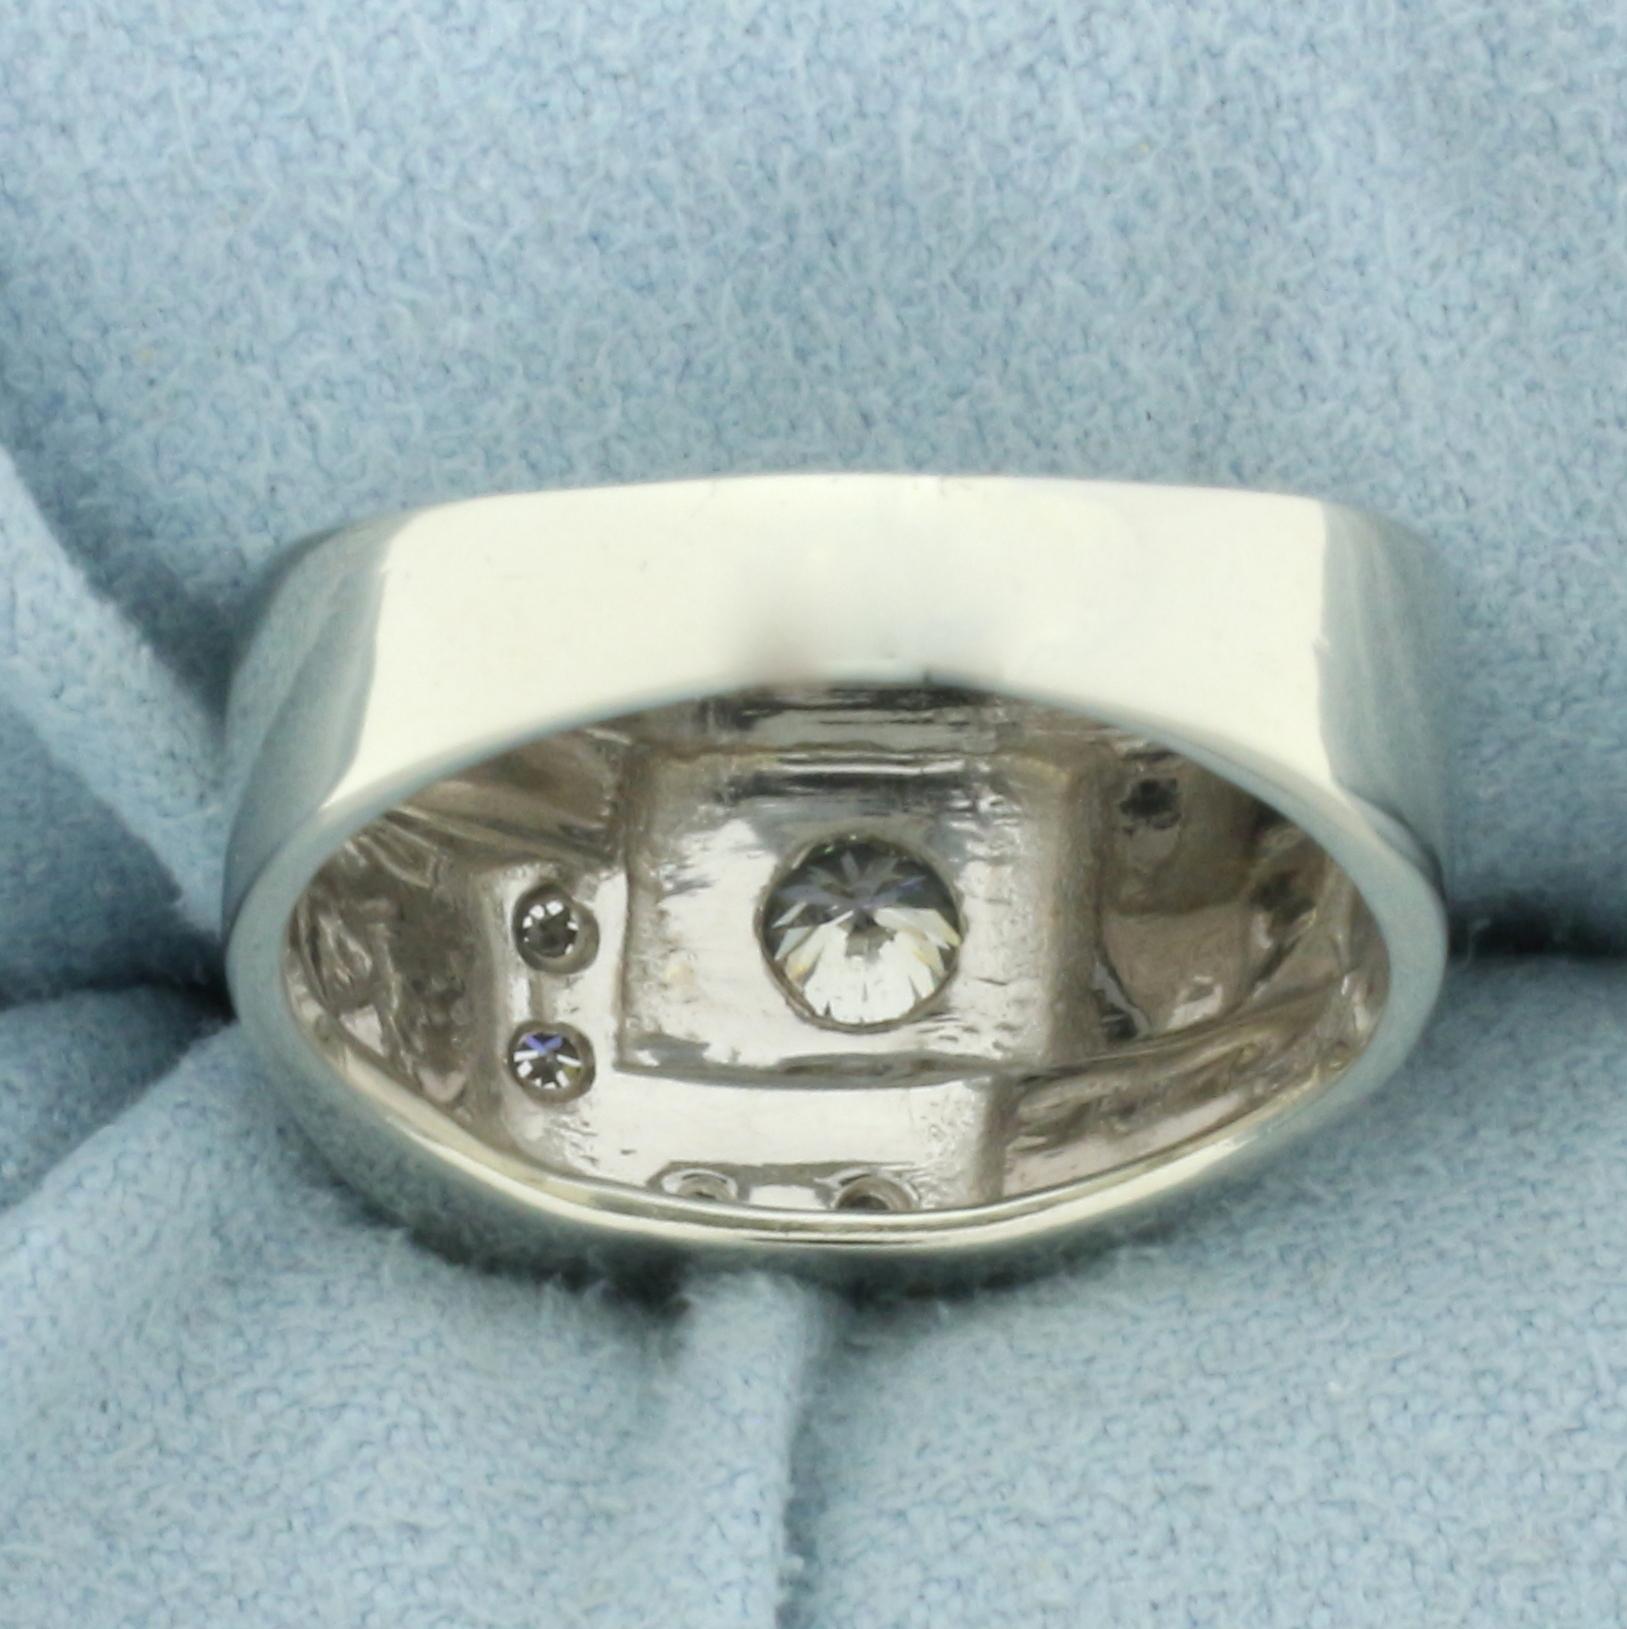 Diamond Geometric Design Ring In 14k White Gold